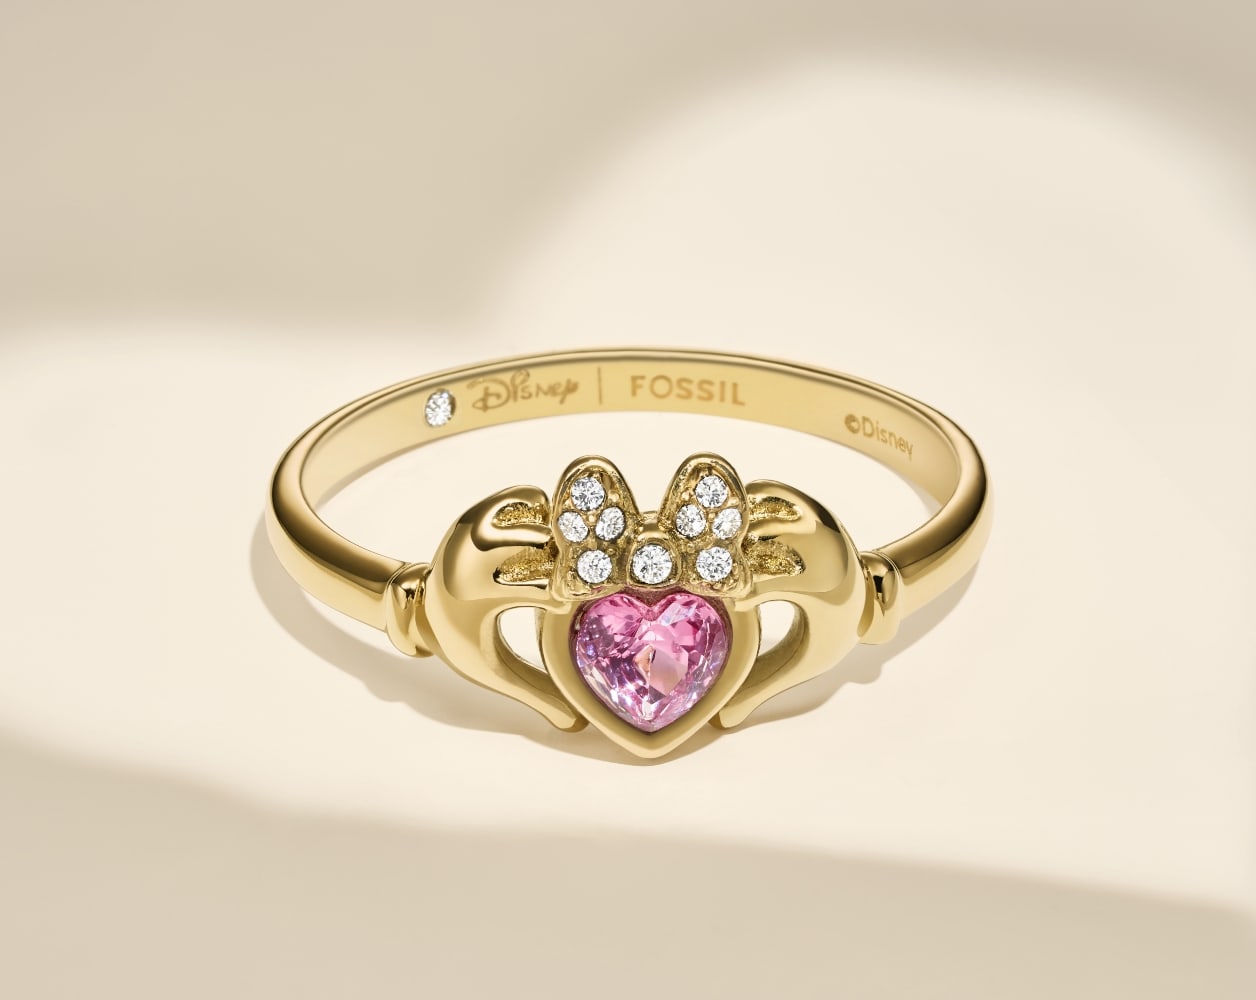 Der goldfarbene Claddagh-Ring Disney | Fossil mit rosafarbenem, herzförmigem Glasstein.